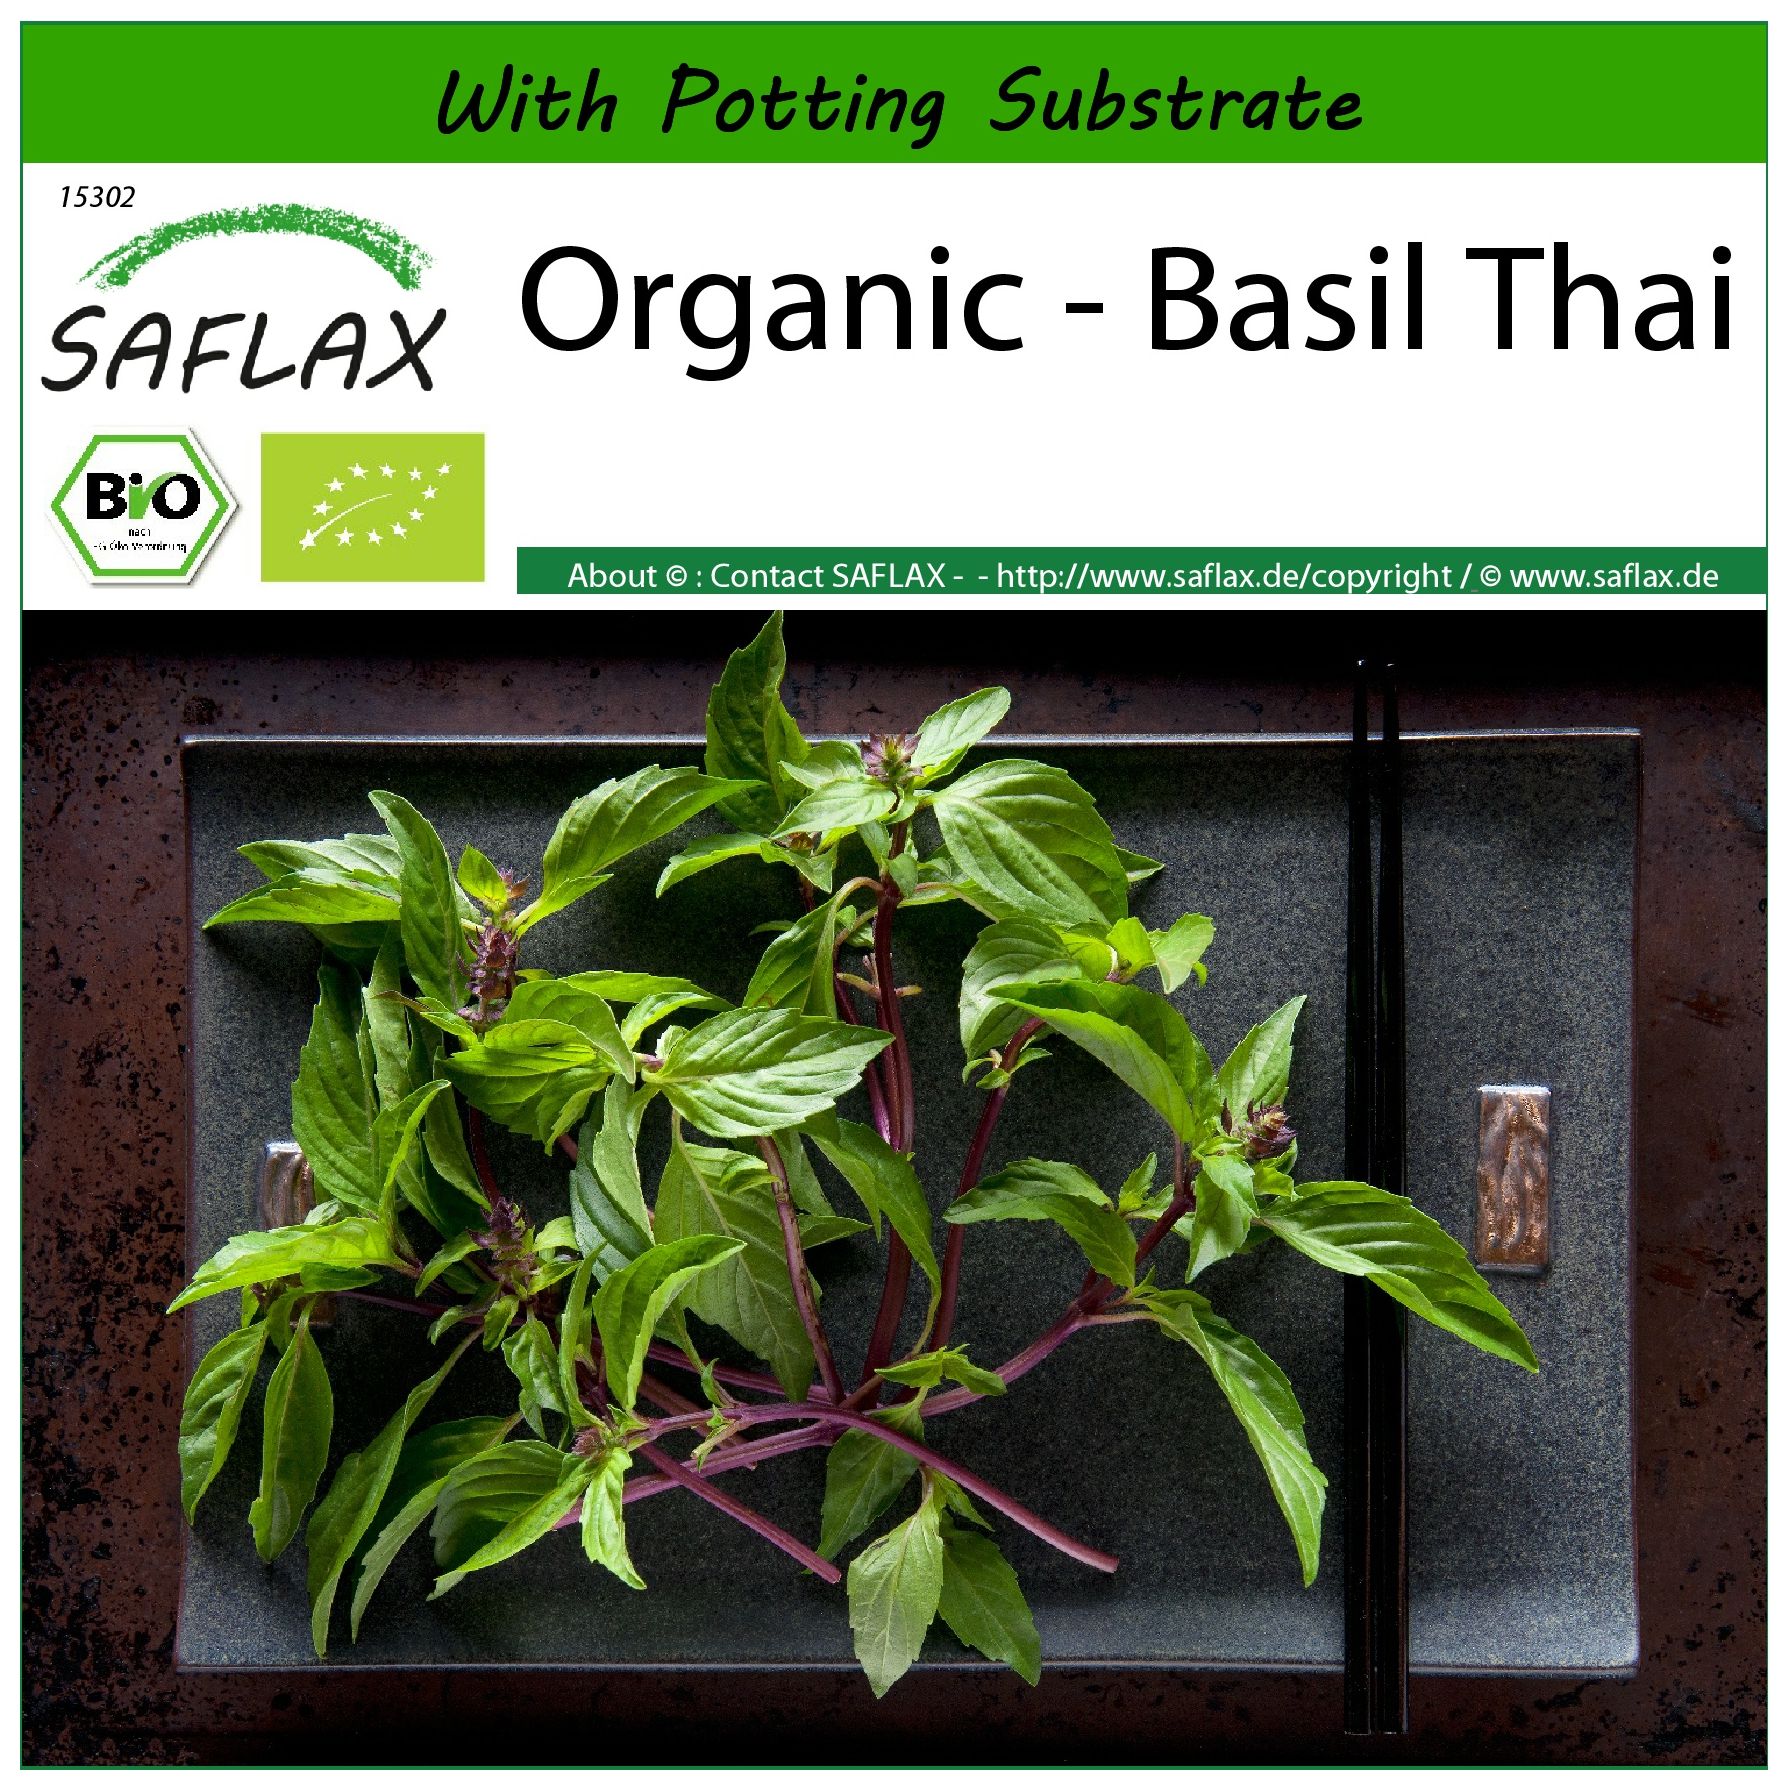 SAFLAX - Organic - Basil Thai - 250 seeds - With soil - Ocimum